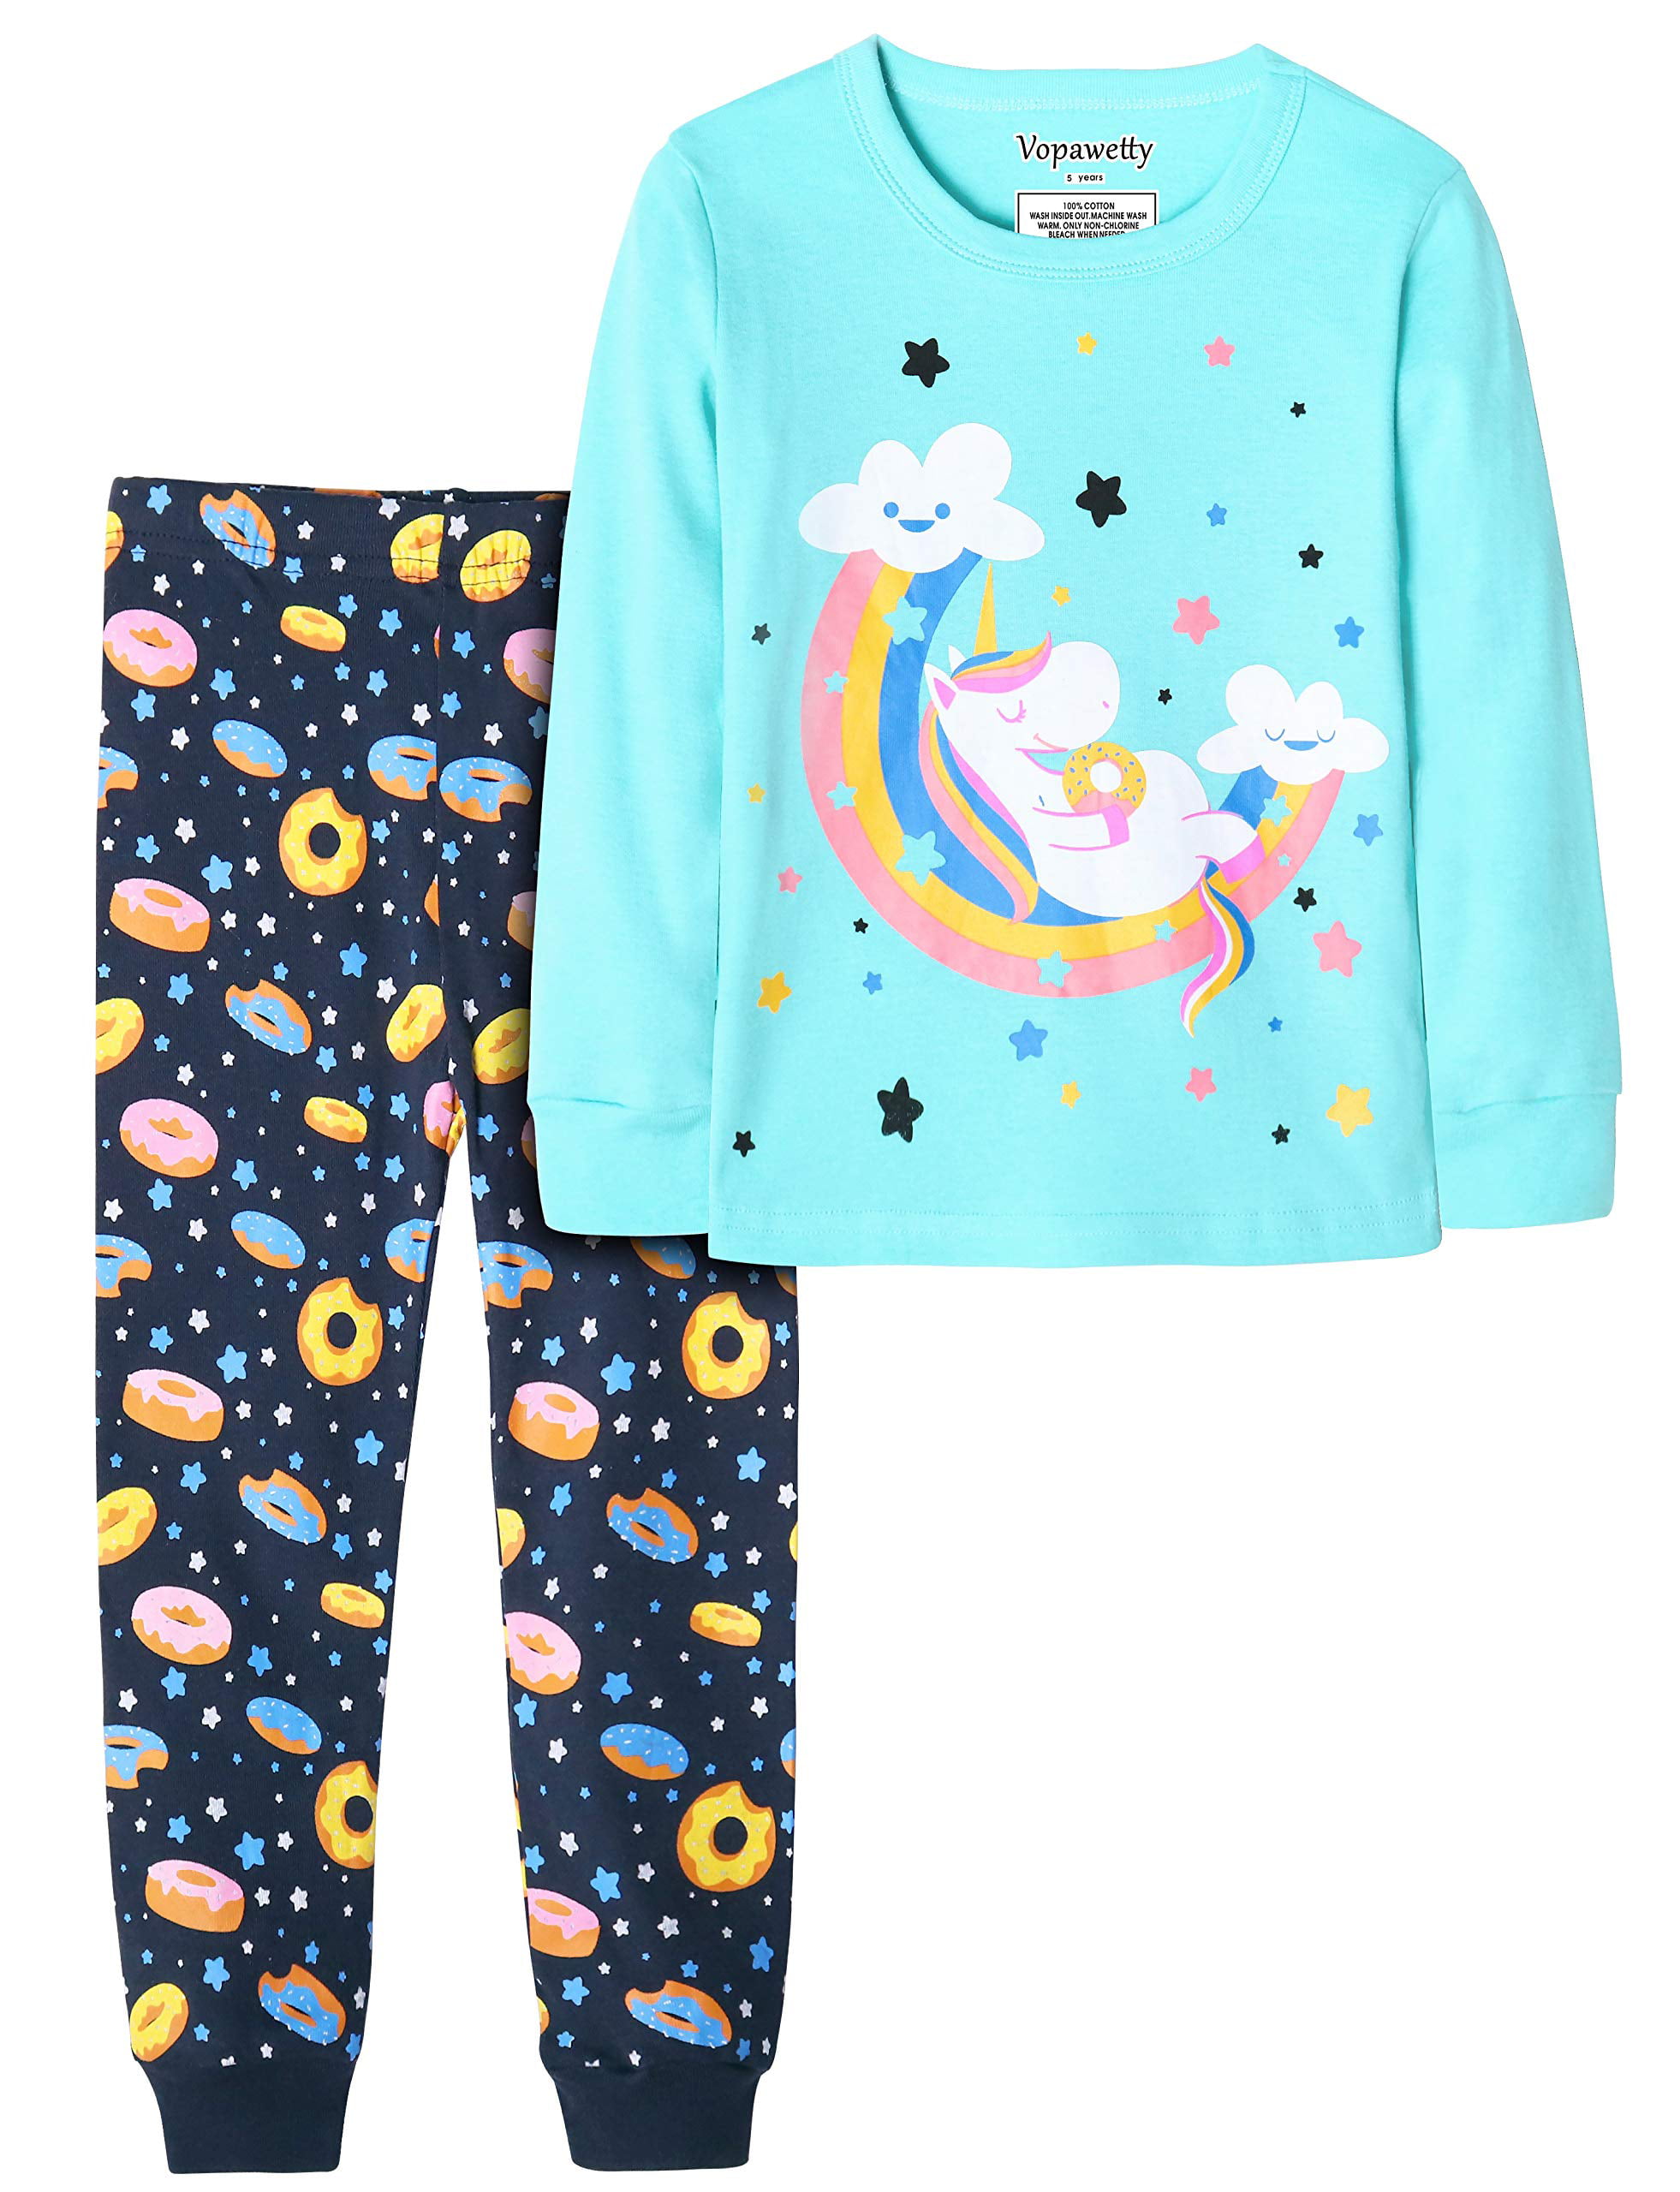 Vopawetty Girls' Snug Fit Cotton Pajama Set Sleepwear 